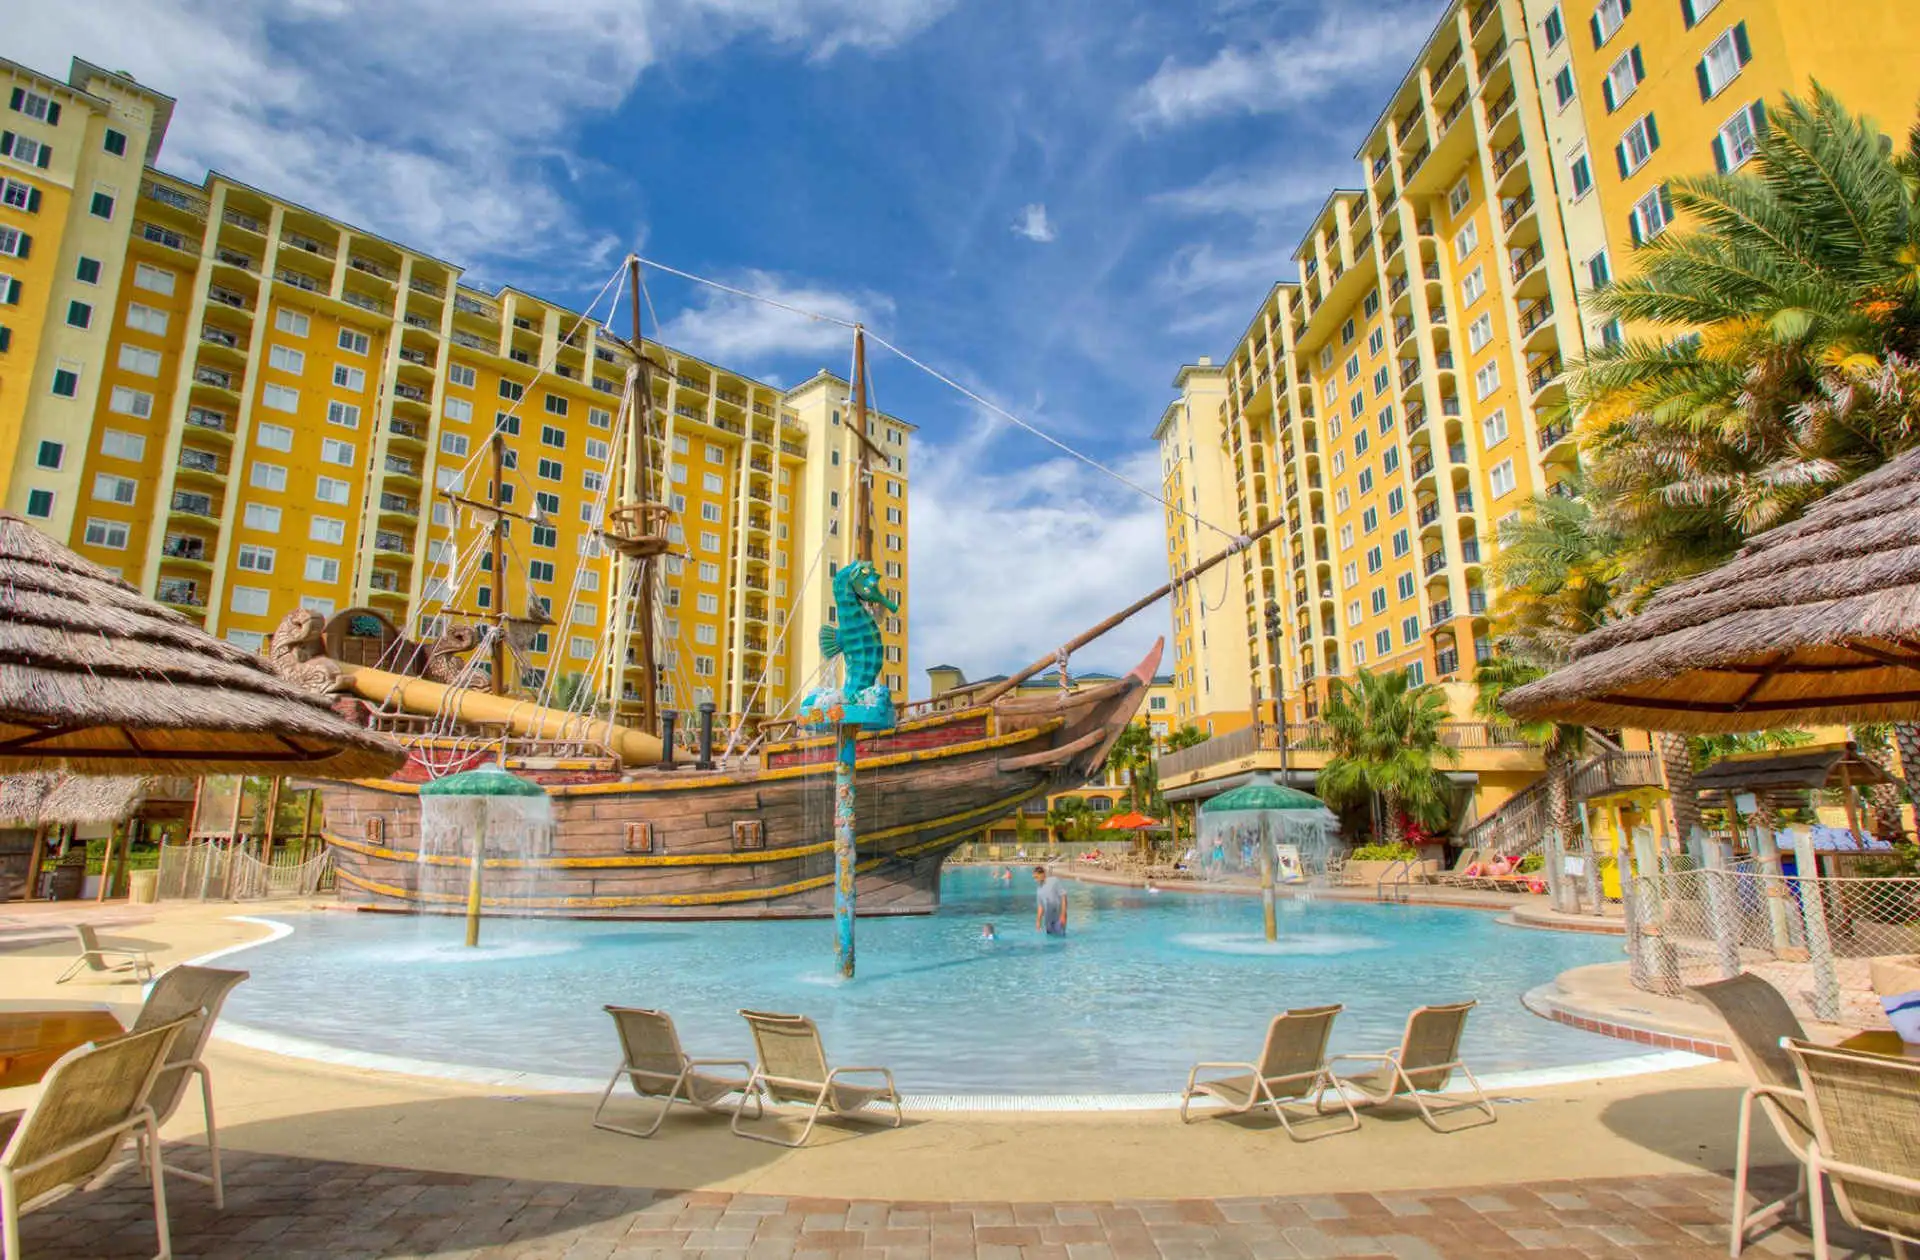 Pool at Lake Buena Vista Resort in Orlando